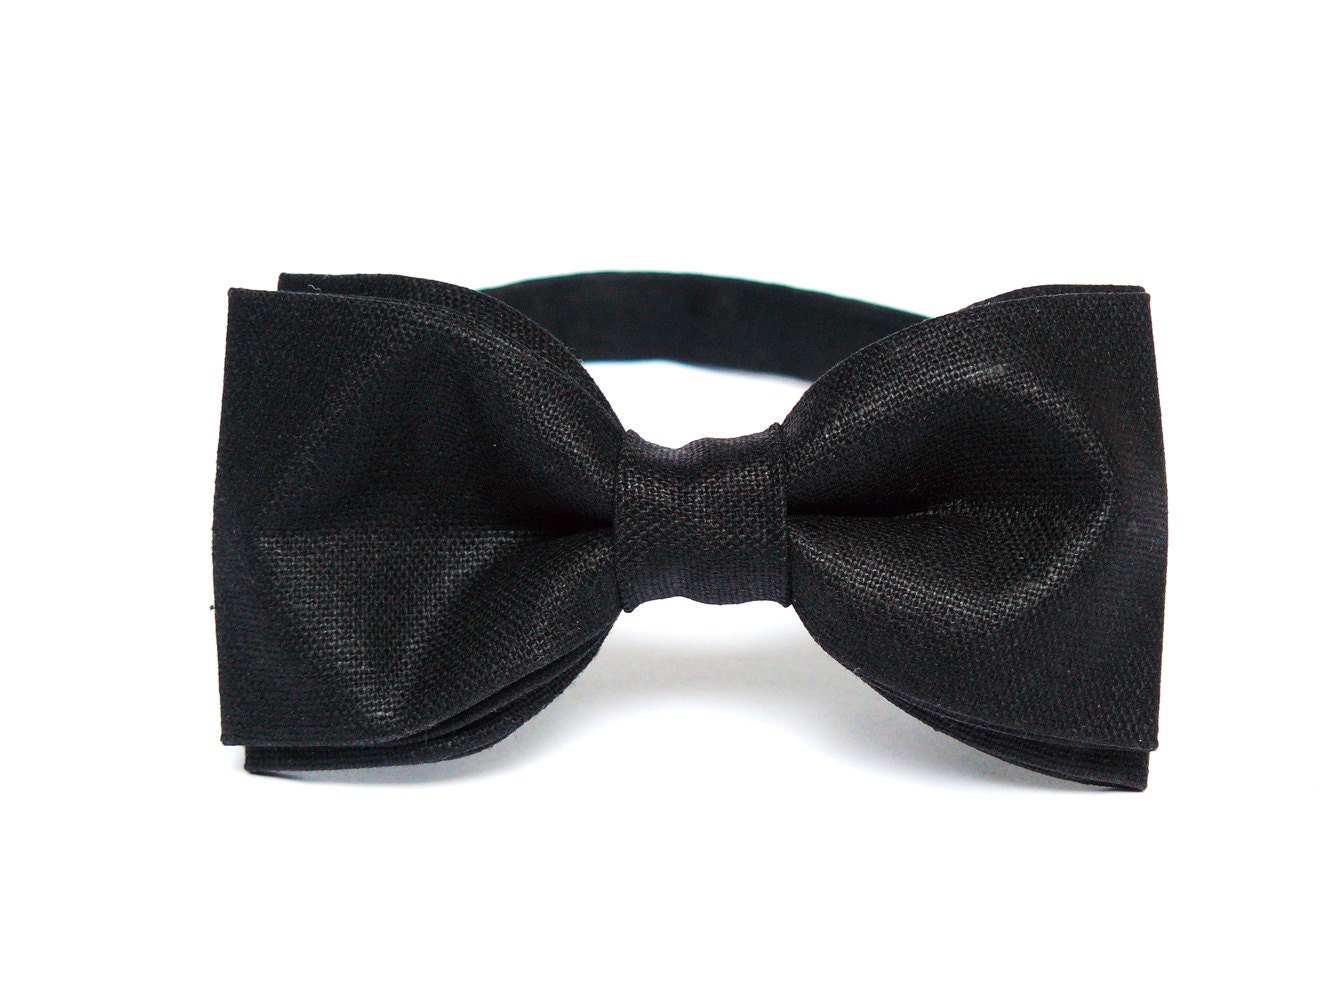 Black Men's Bow Tie by BartekDesign: pre tied linen cotton light shiny wedding grooms bow tie